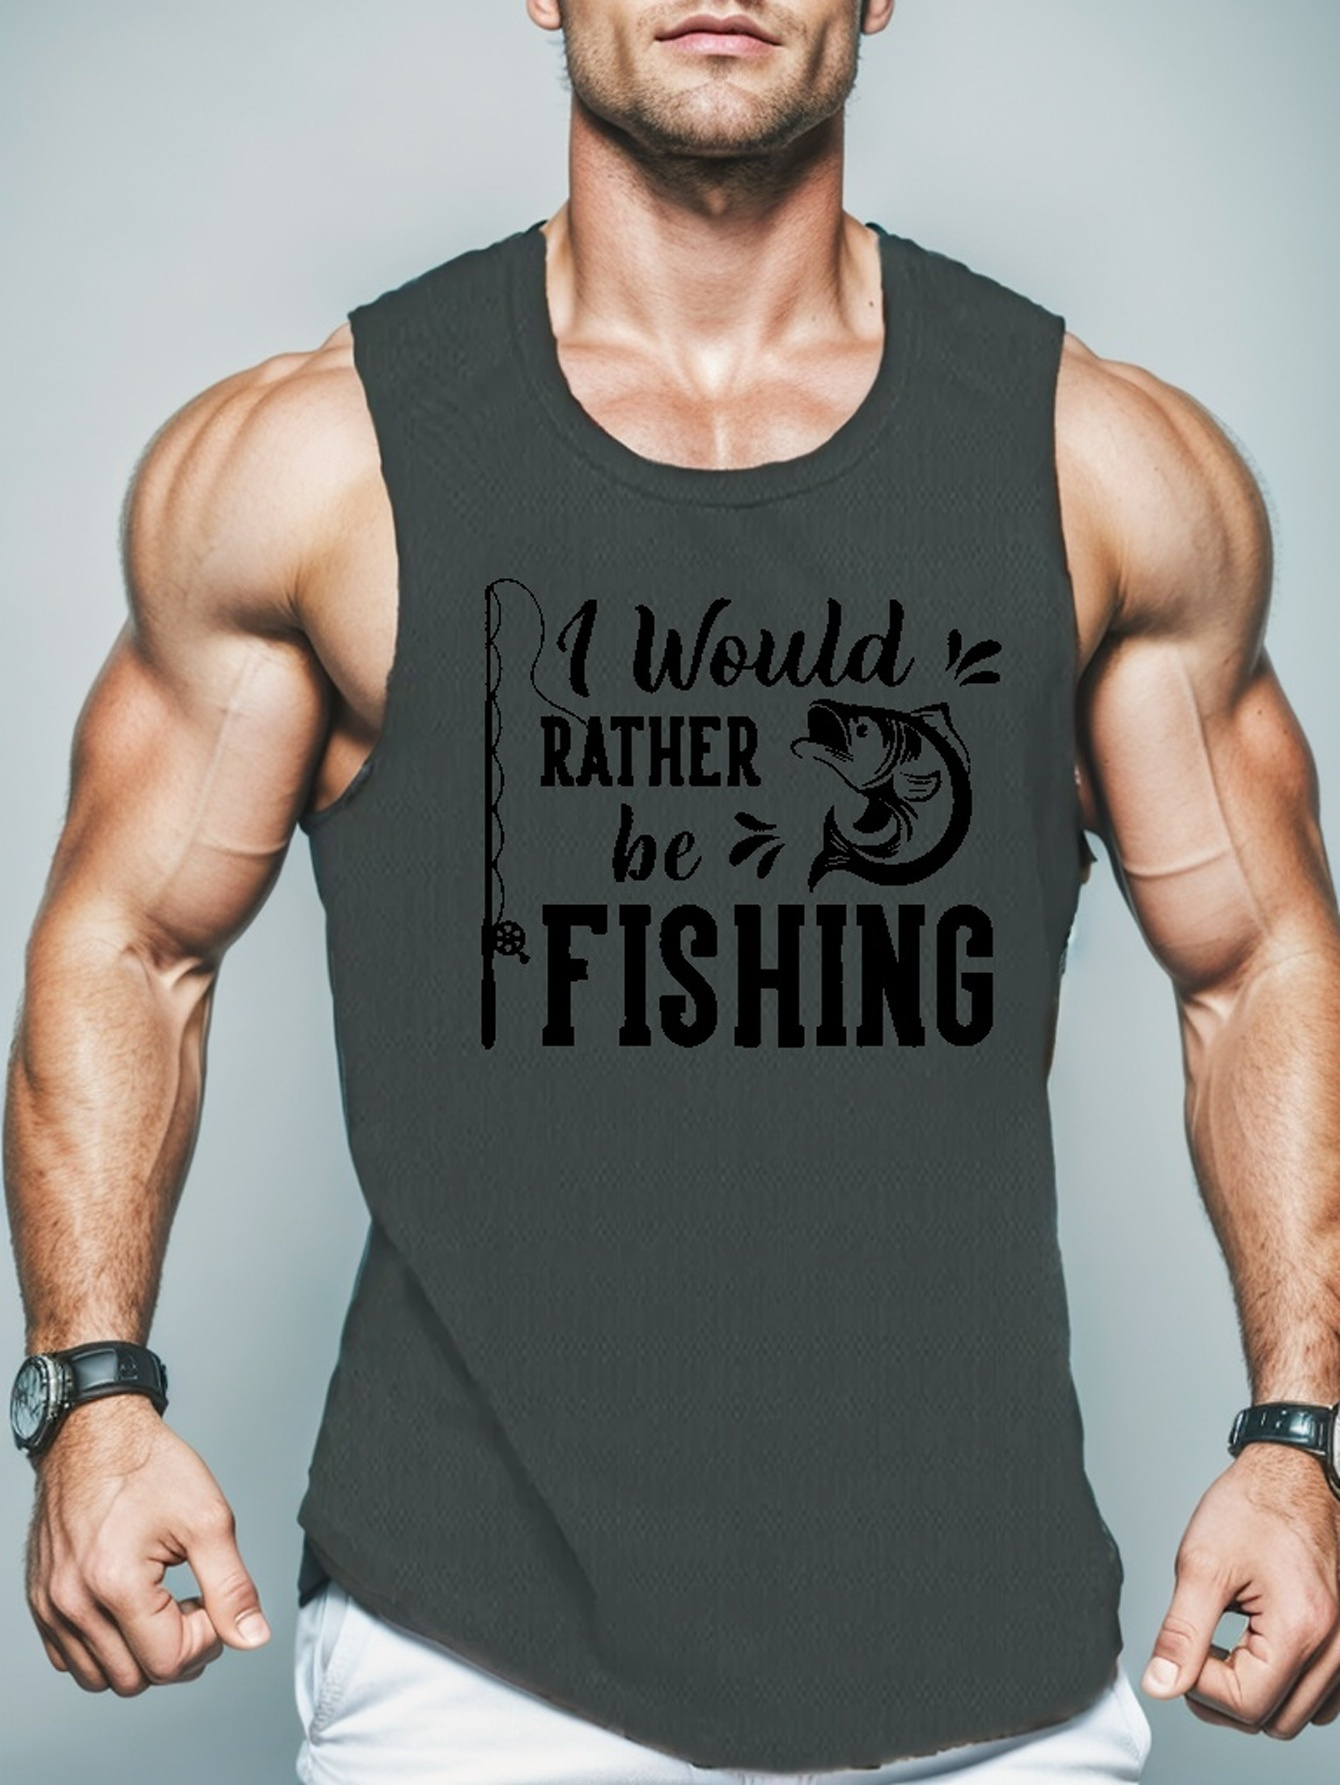  Fishing Tank Tops For Men